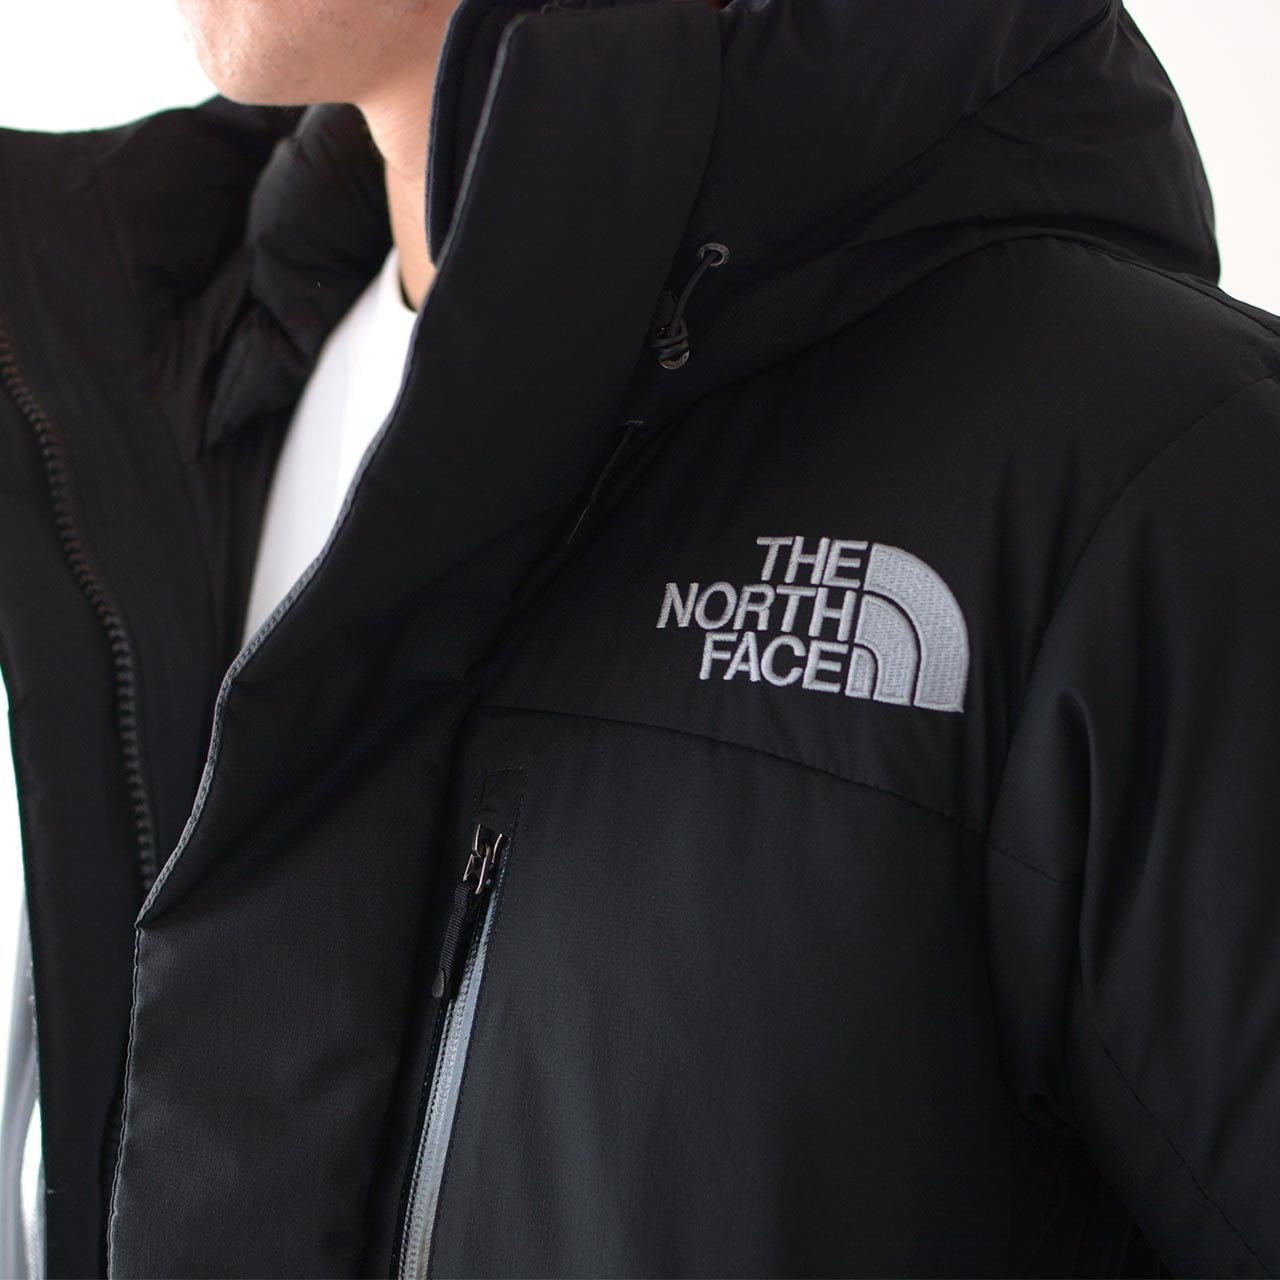 THE NORTH FACE [ザ ノースフェイス正規代理店] Baltro Light Jacket